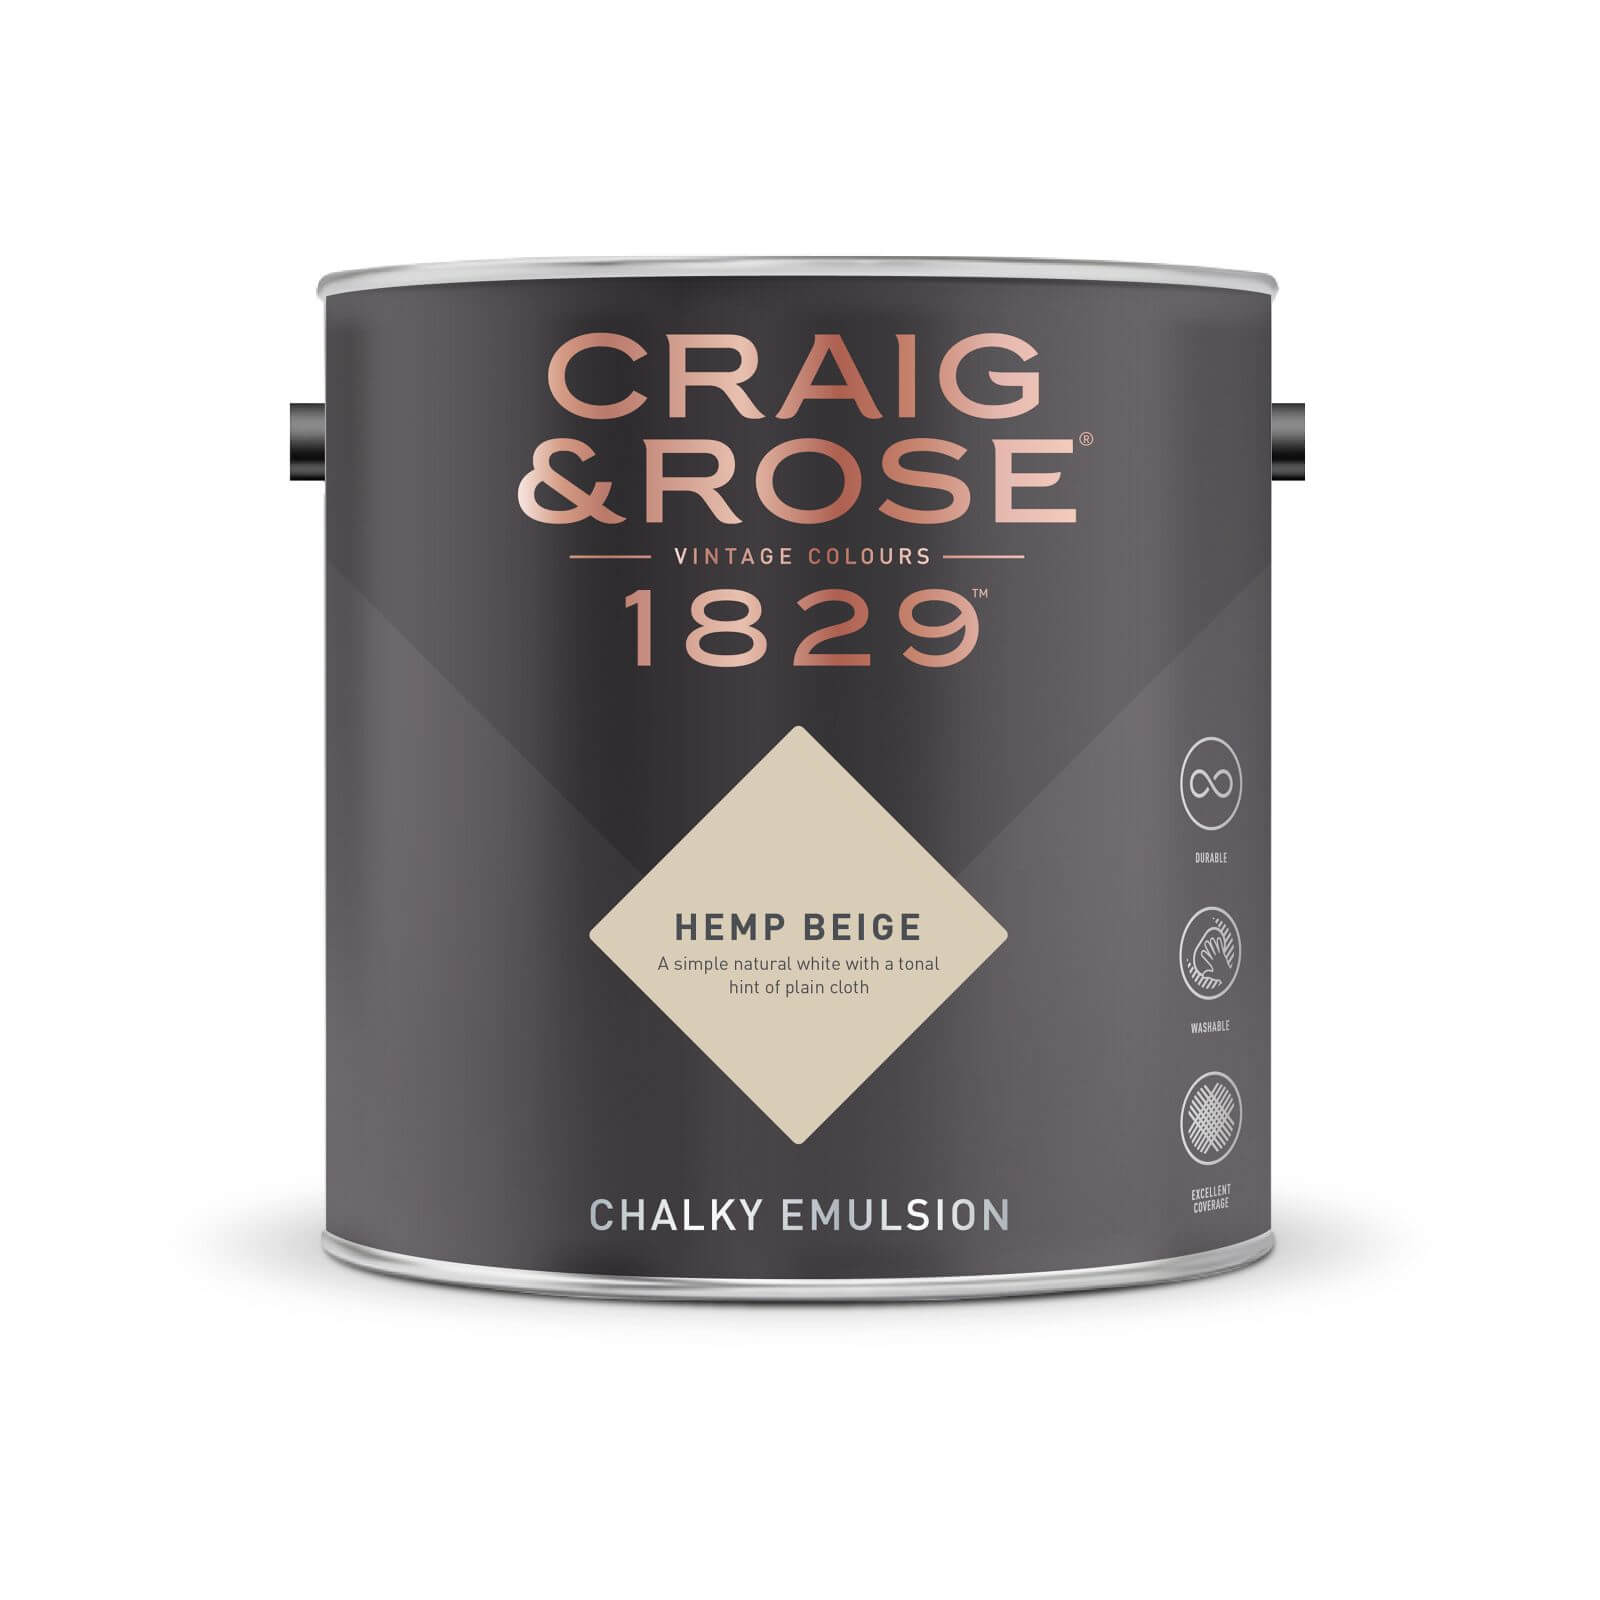 Craig & Rose 1829 Chalky Emulsion Paint Hemp Beige - Tester 50ml